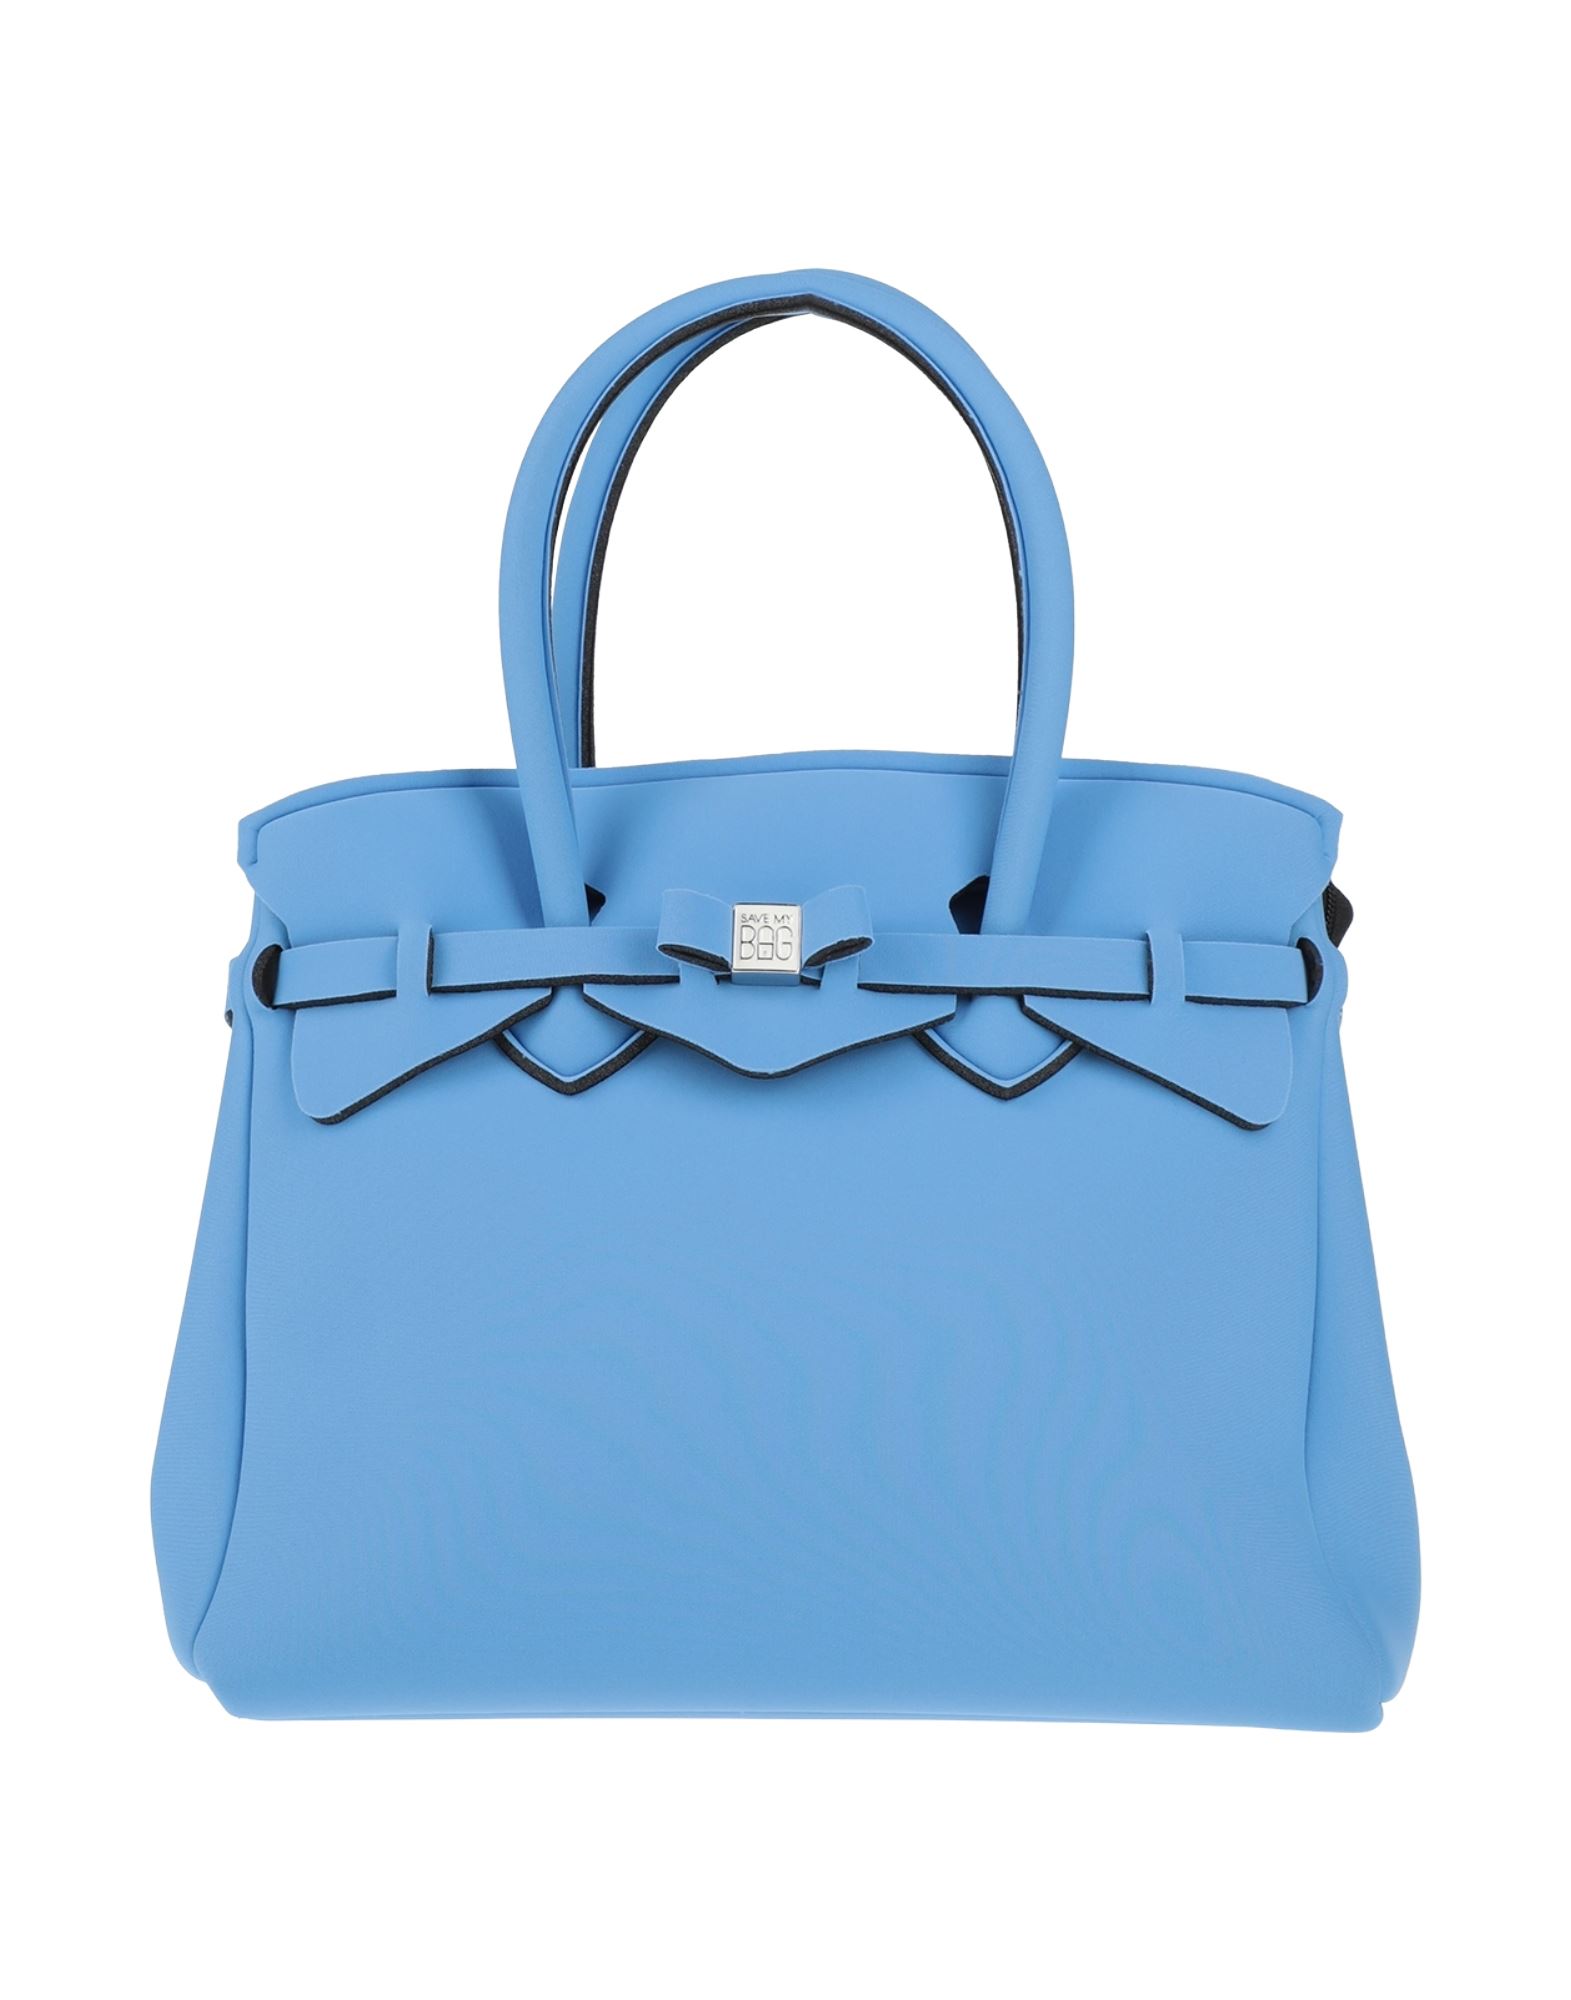 Save My Bag Handbags In Pastel Blue